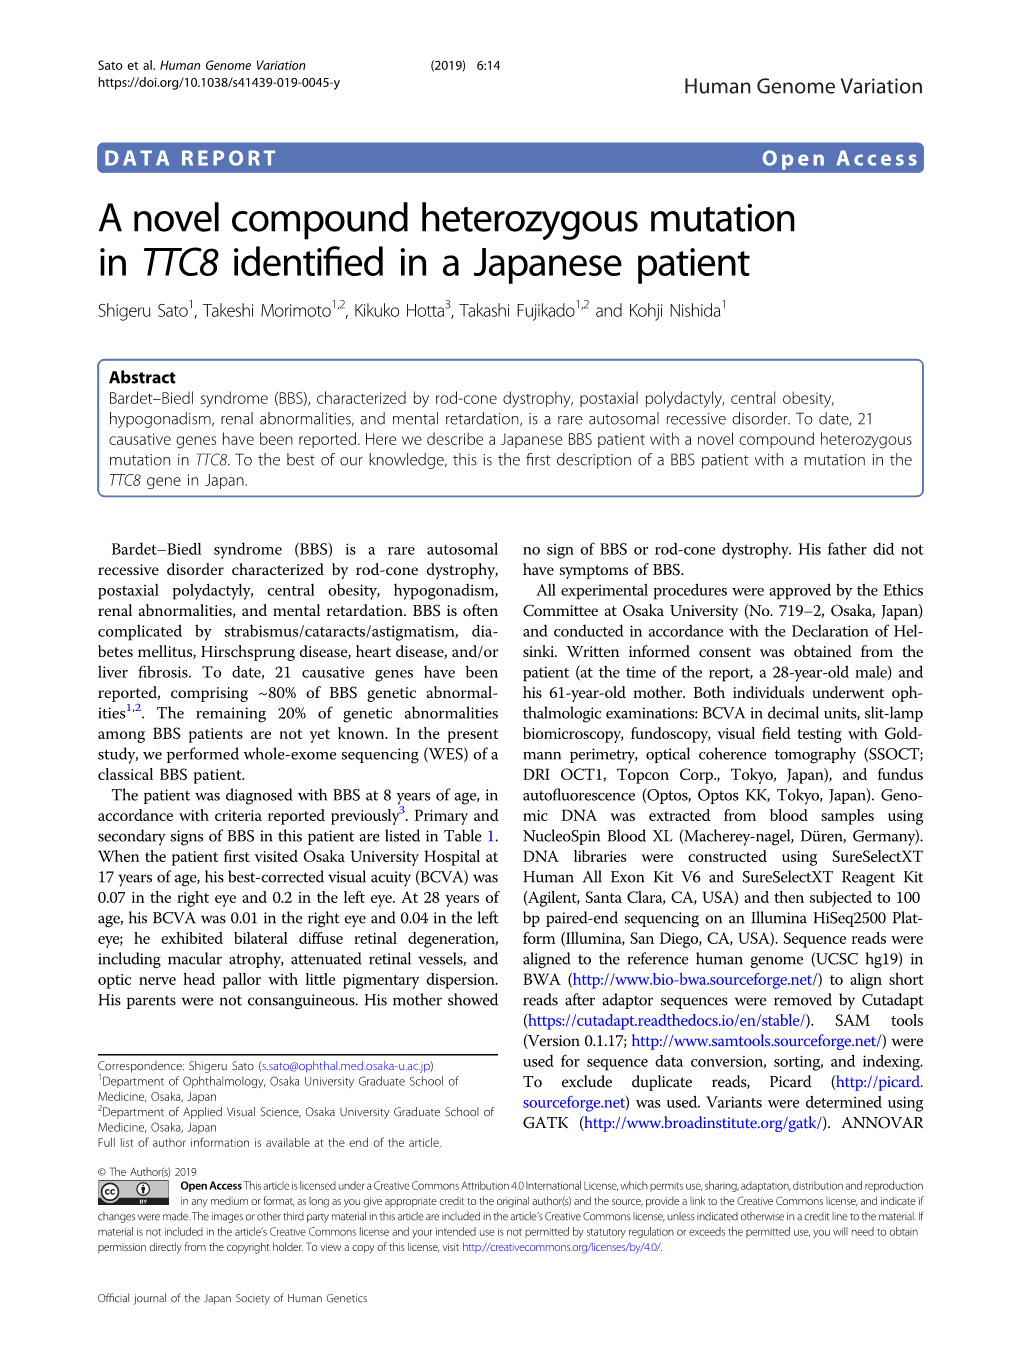 A Novel Compound Heterozygous Mutation in TTC8 Identified in A